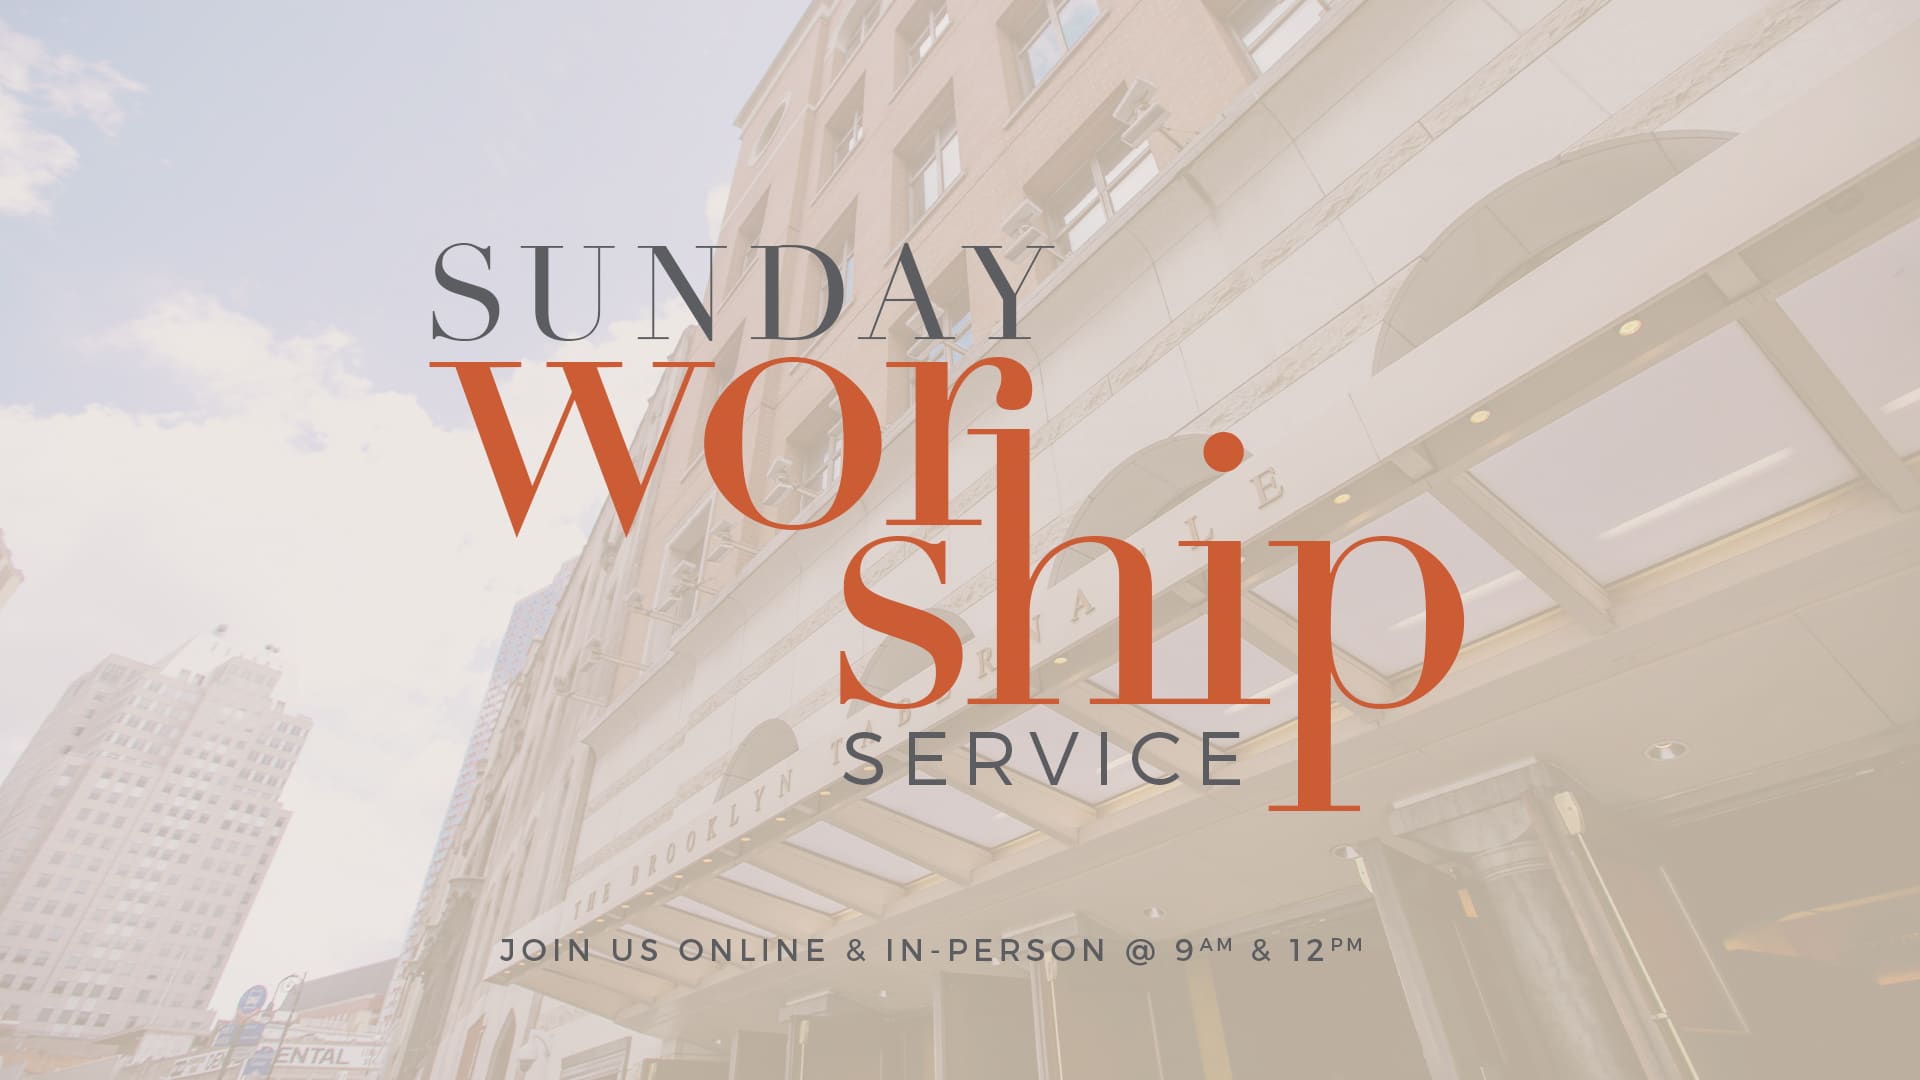 Brooklyn Tabernacle Sunday Worship Service Online Thumbnail